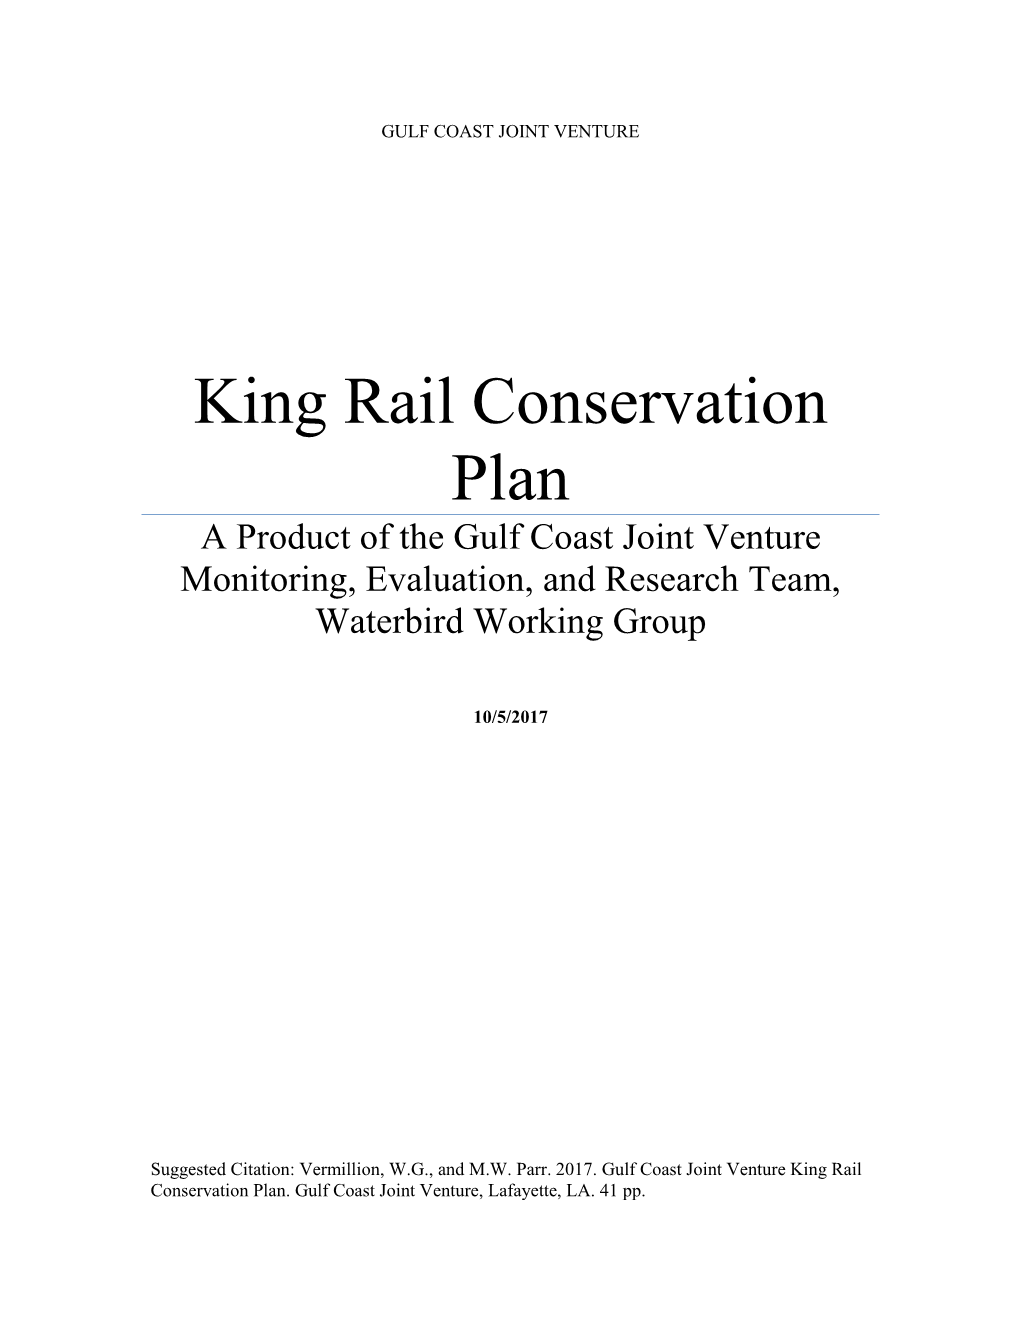 GCJV King Rail Conservation Plan